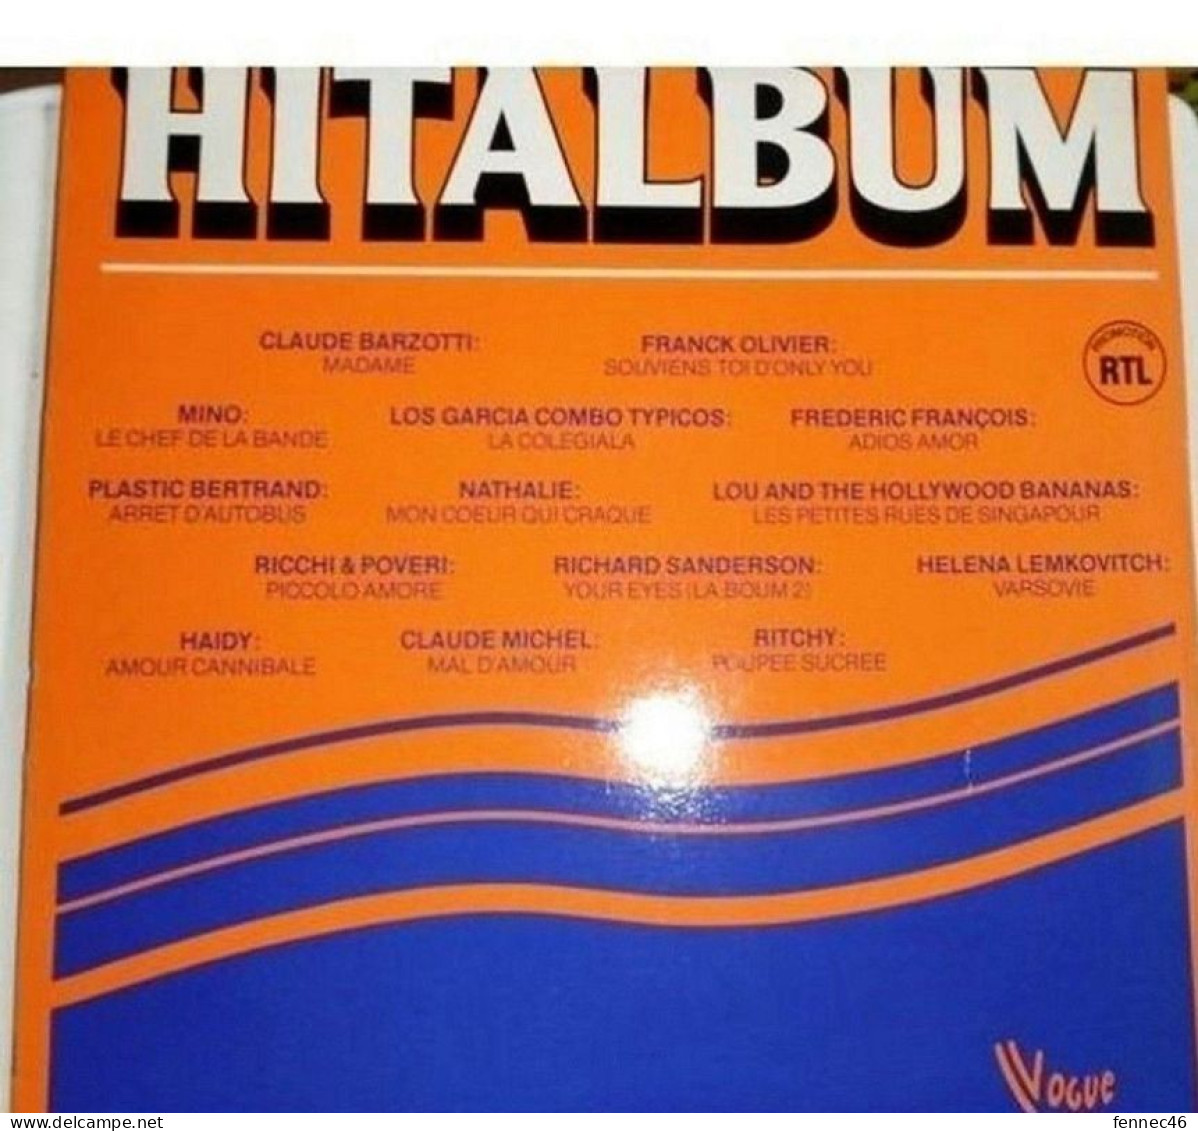 * Vinyle - 33t - HITALBUM (Claude BARZOTTI, Claude MICHEL, HAIDY,... - Altri - Francese